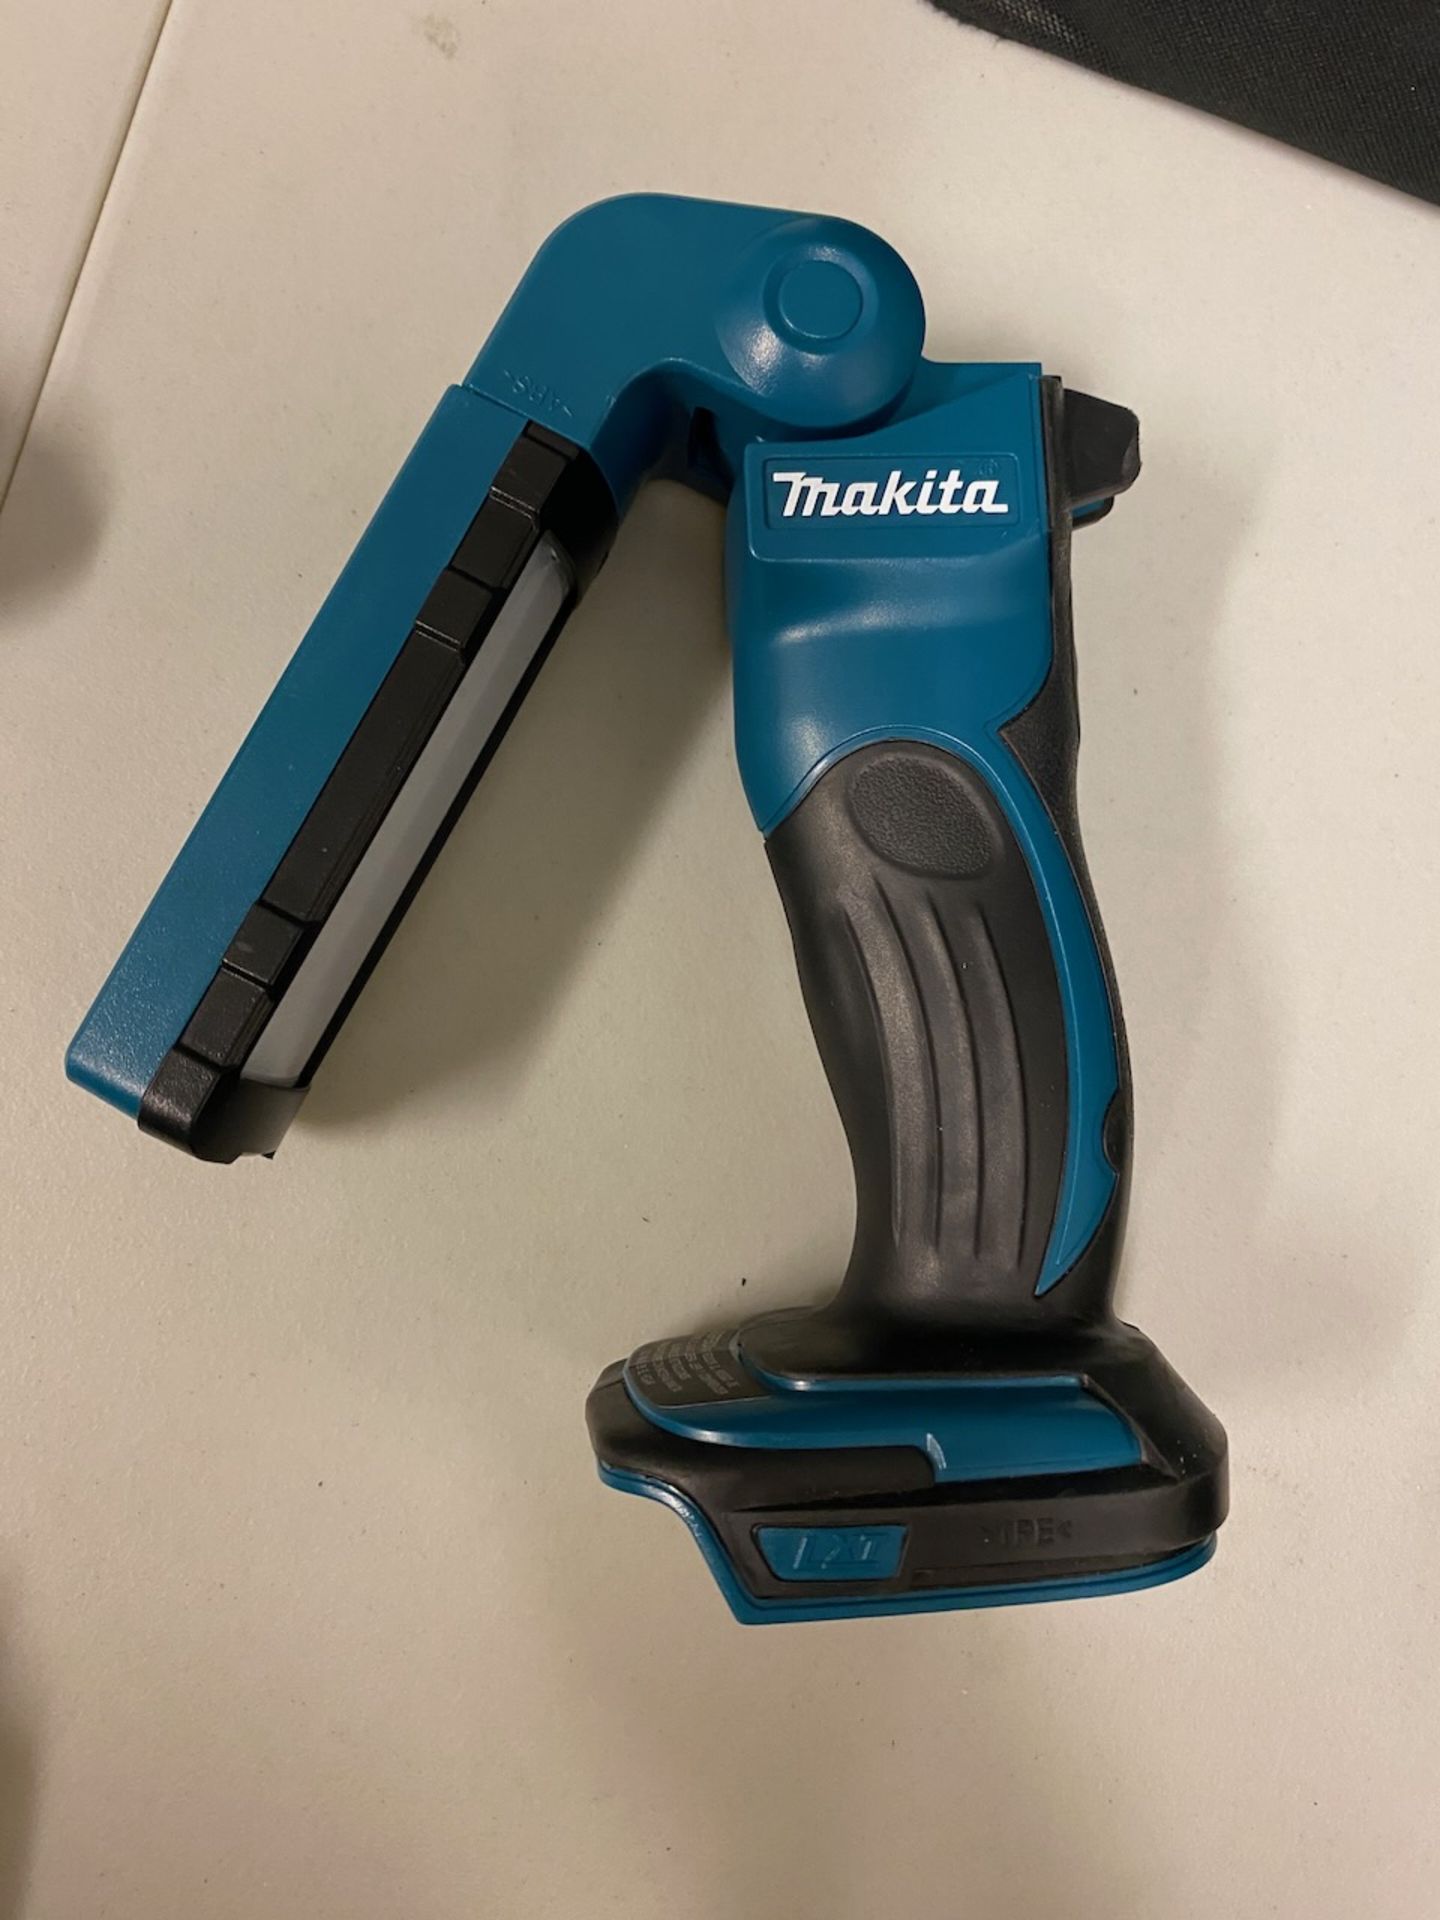 Makita lithium ion tool kit - Image 8 of 9